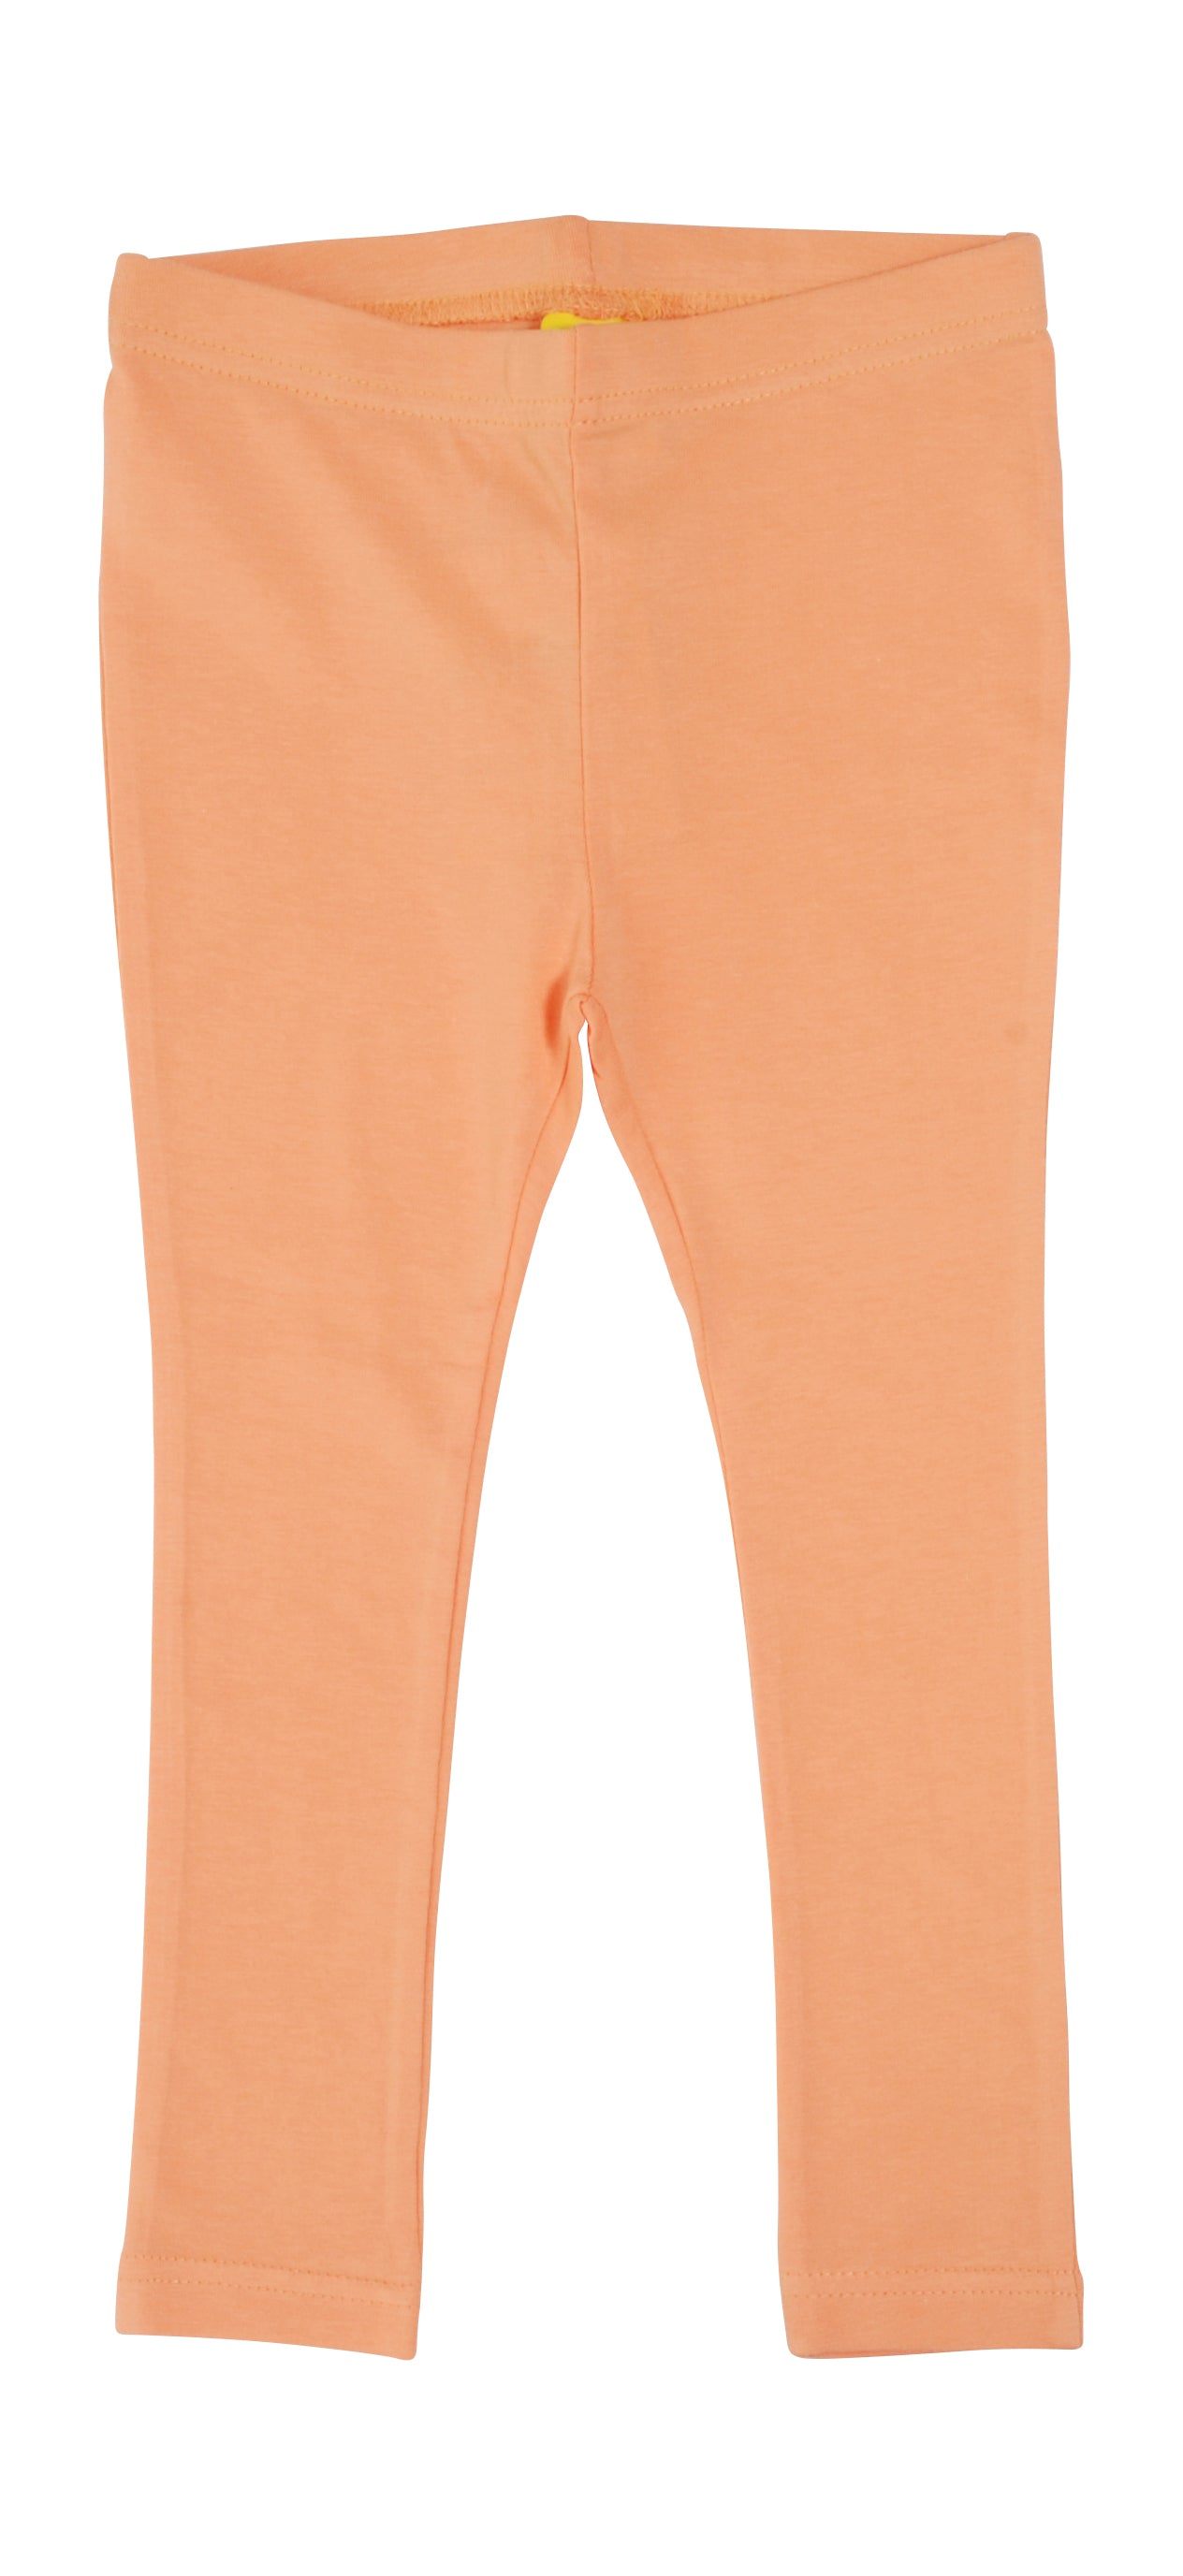 More Than A Fling Legging Cantaloup - Zacht Oranje Roze Legging